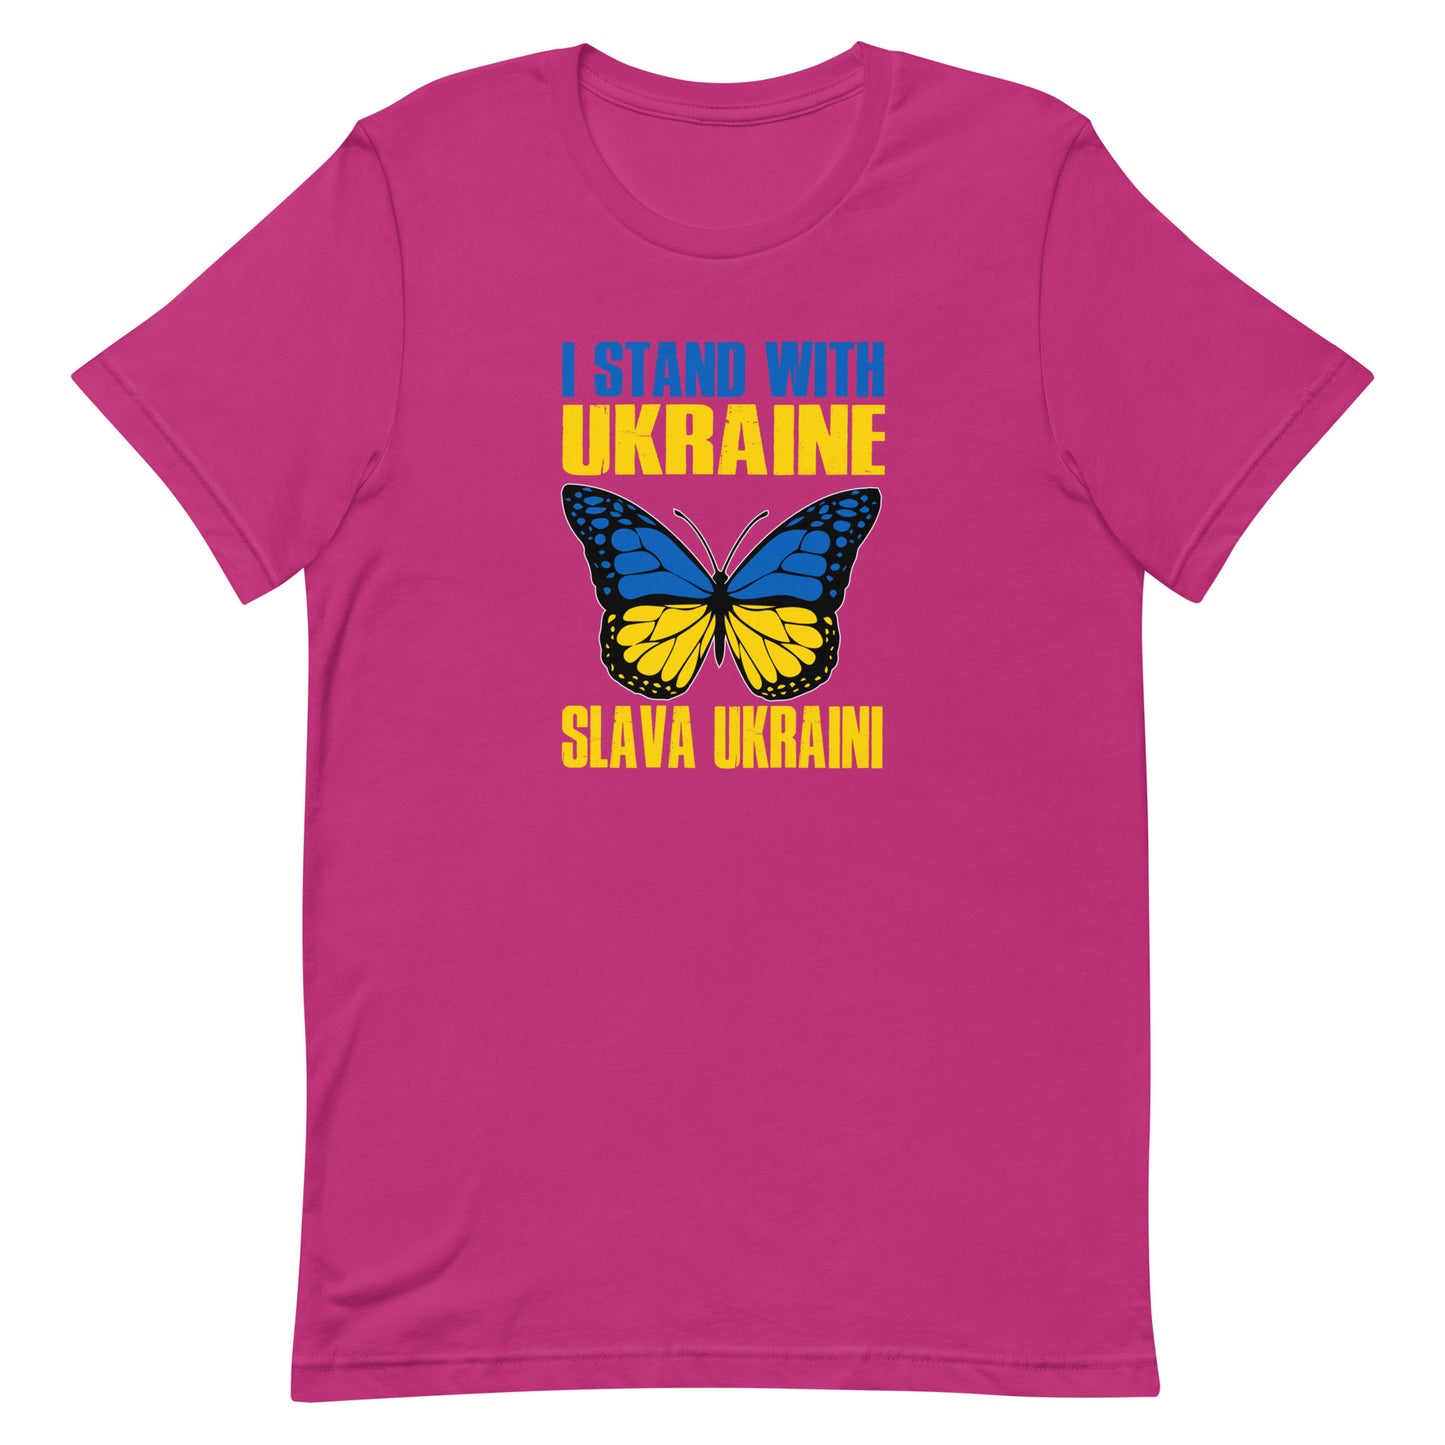 Unisex t-shirt | I stand with Ukraine Slava Ukraine